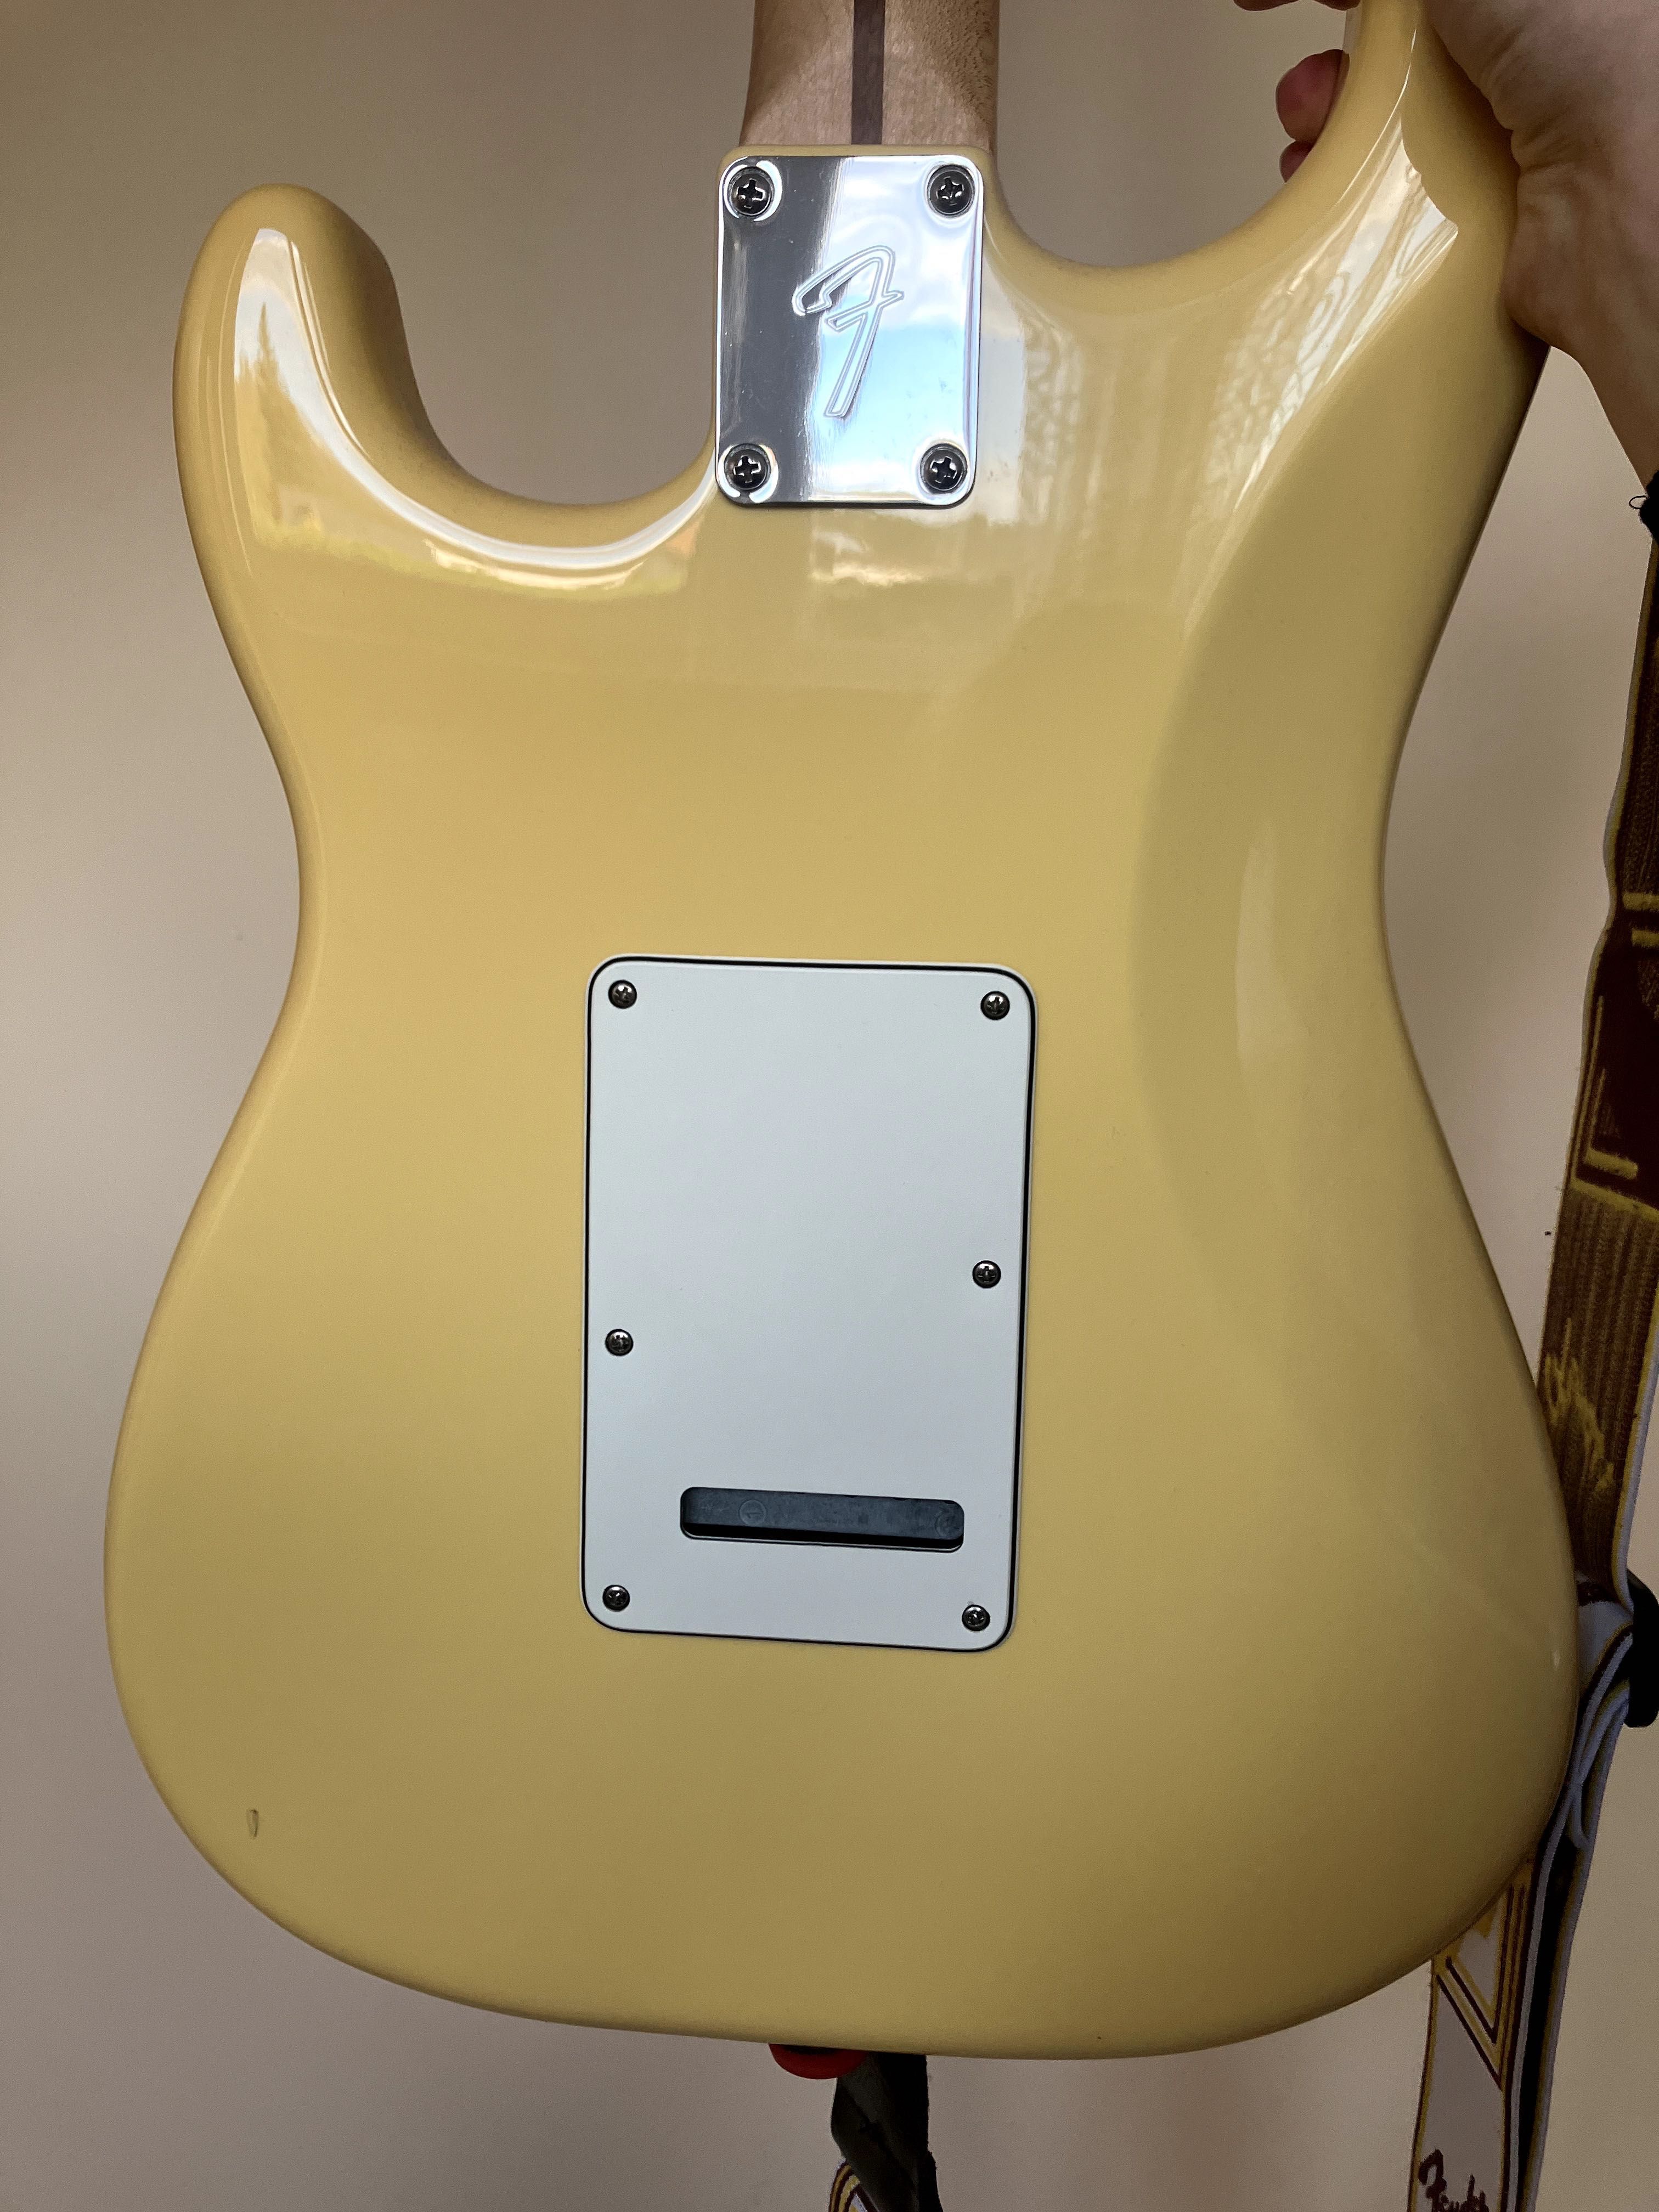 Fender Player Stratocaster + pasek fender + kabel fender